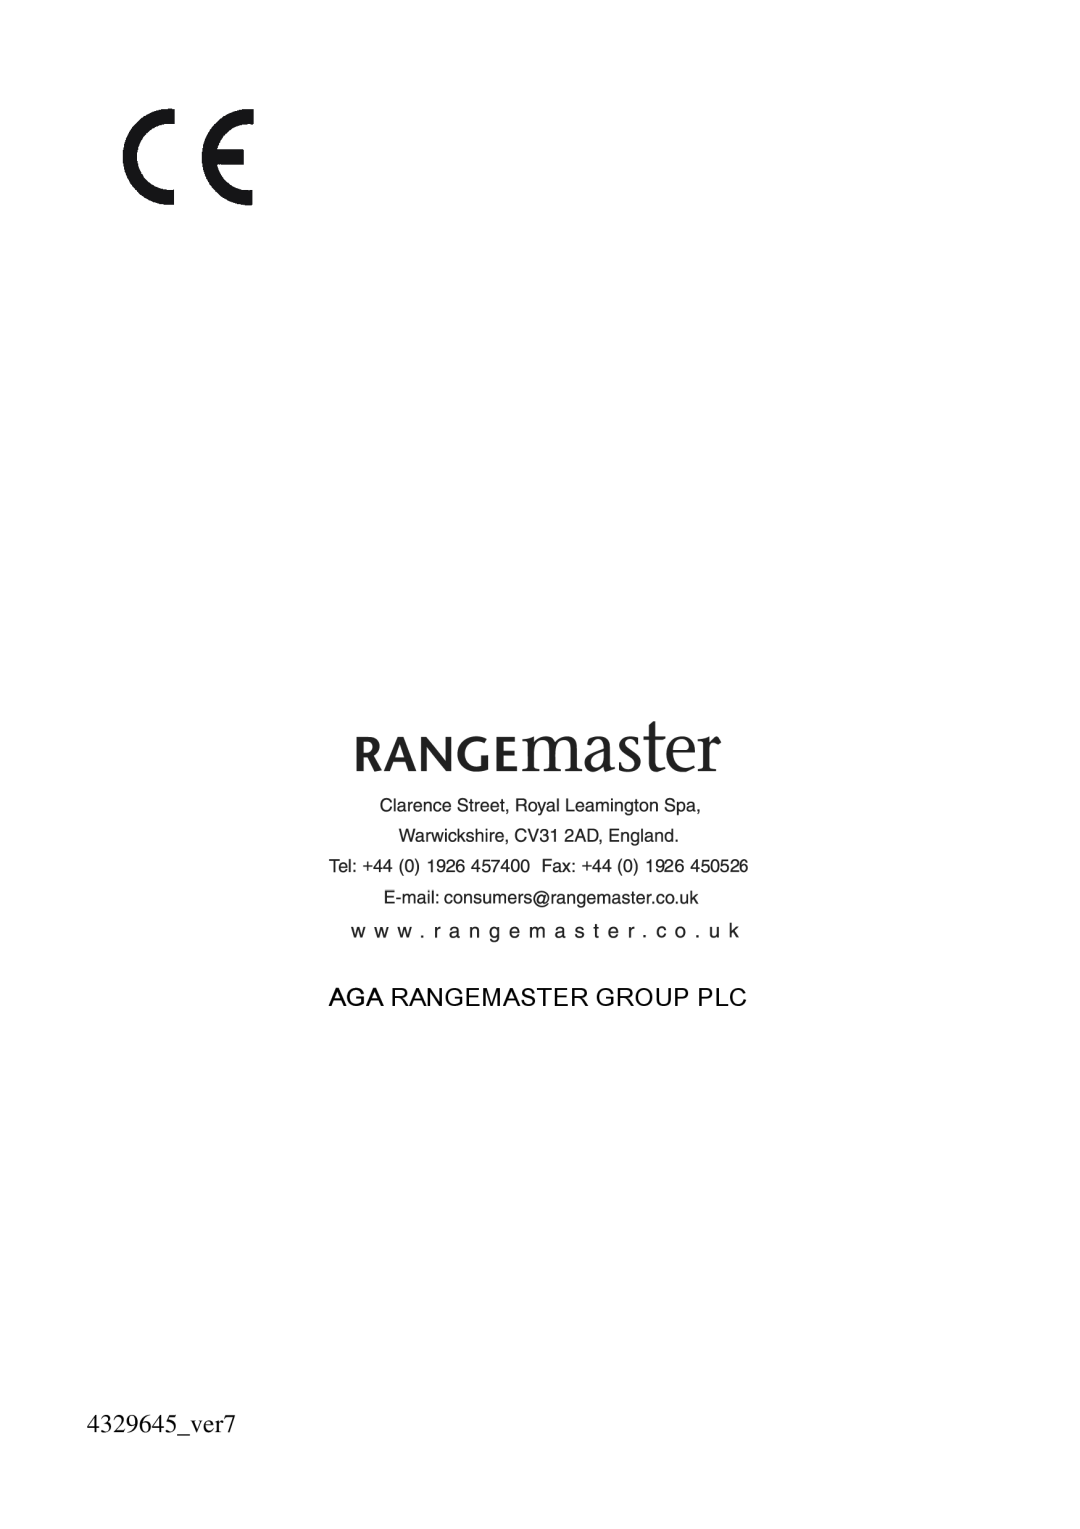 Rangemaster LEIHDC70BC, LEIHDC70SC, LEIHDC70BB manual Aga Rangemaster Group Plc, 4329645 ver7 